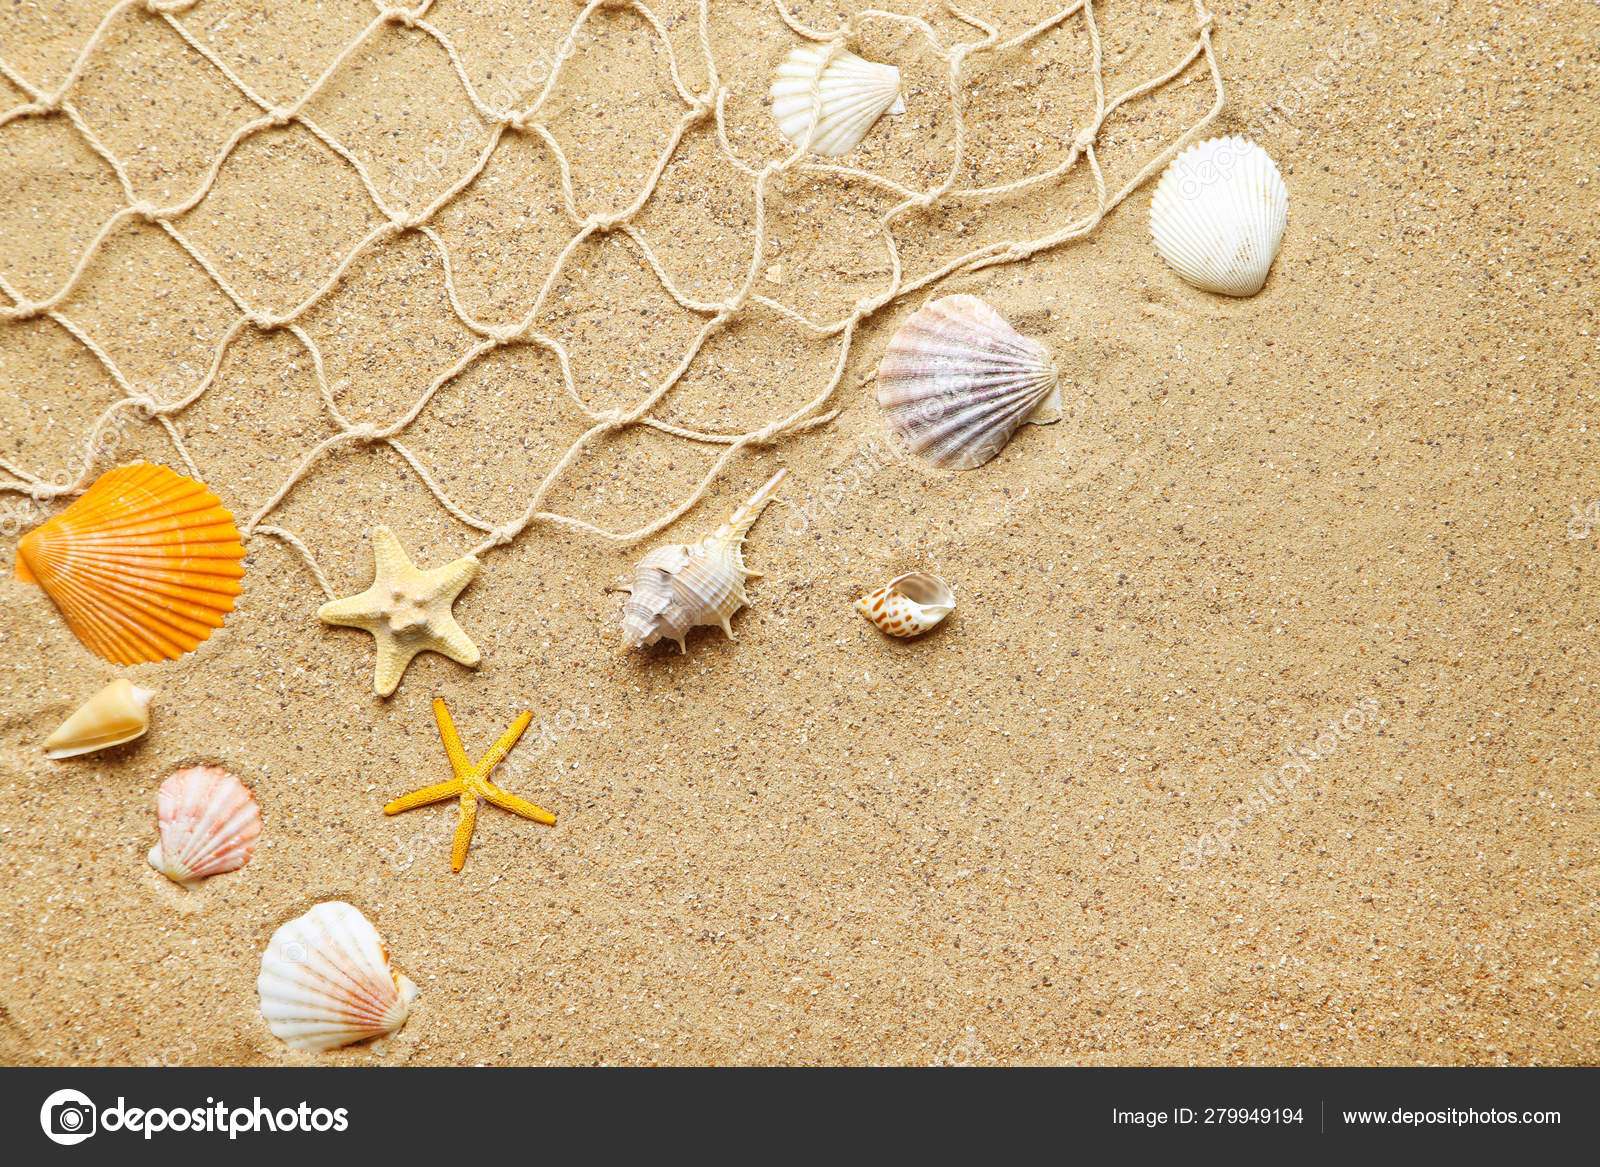 https://st4.depositphotos.com/4278641/27994/i/1600/depositphotos_279949194-stock-photo-seashells-with-fishing-net-on.jpg